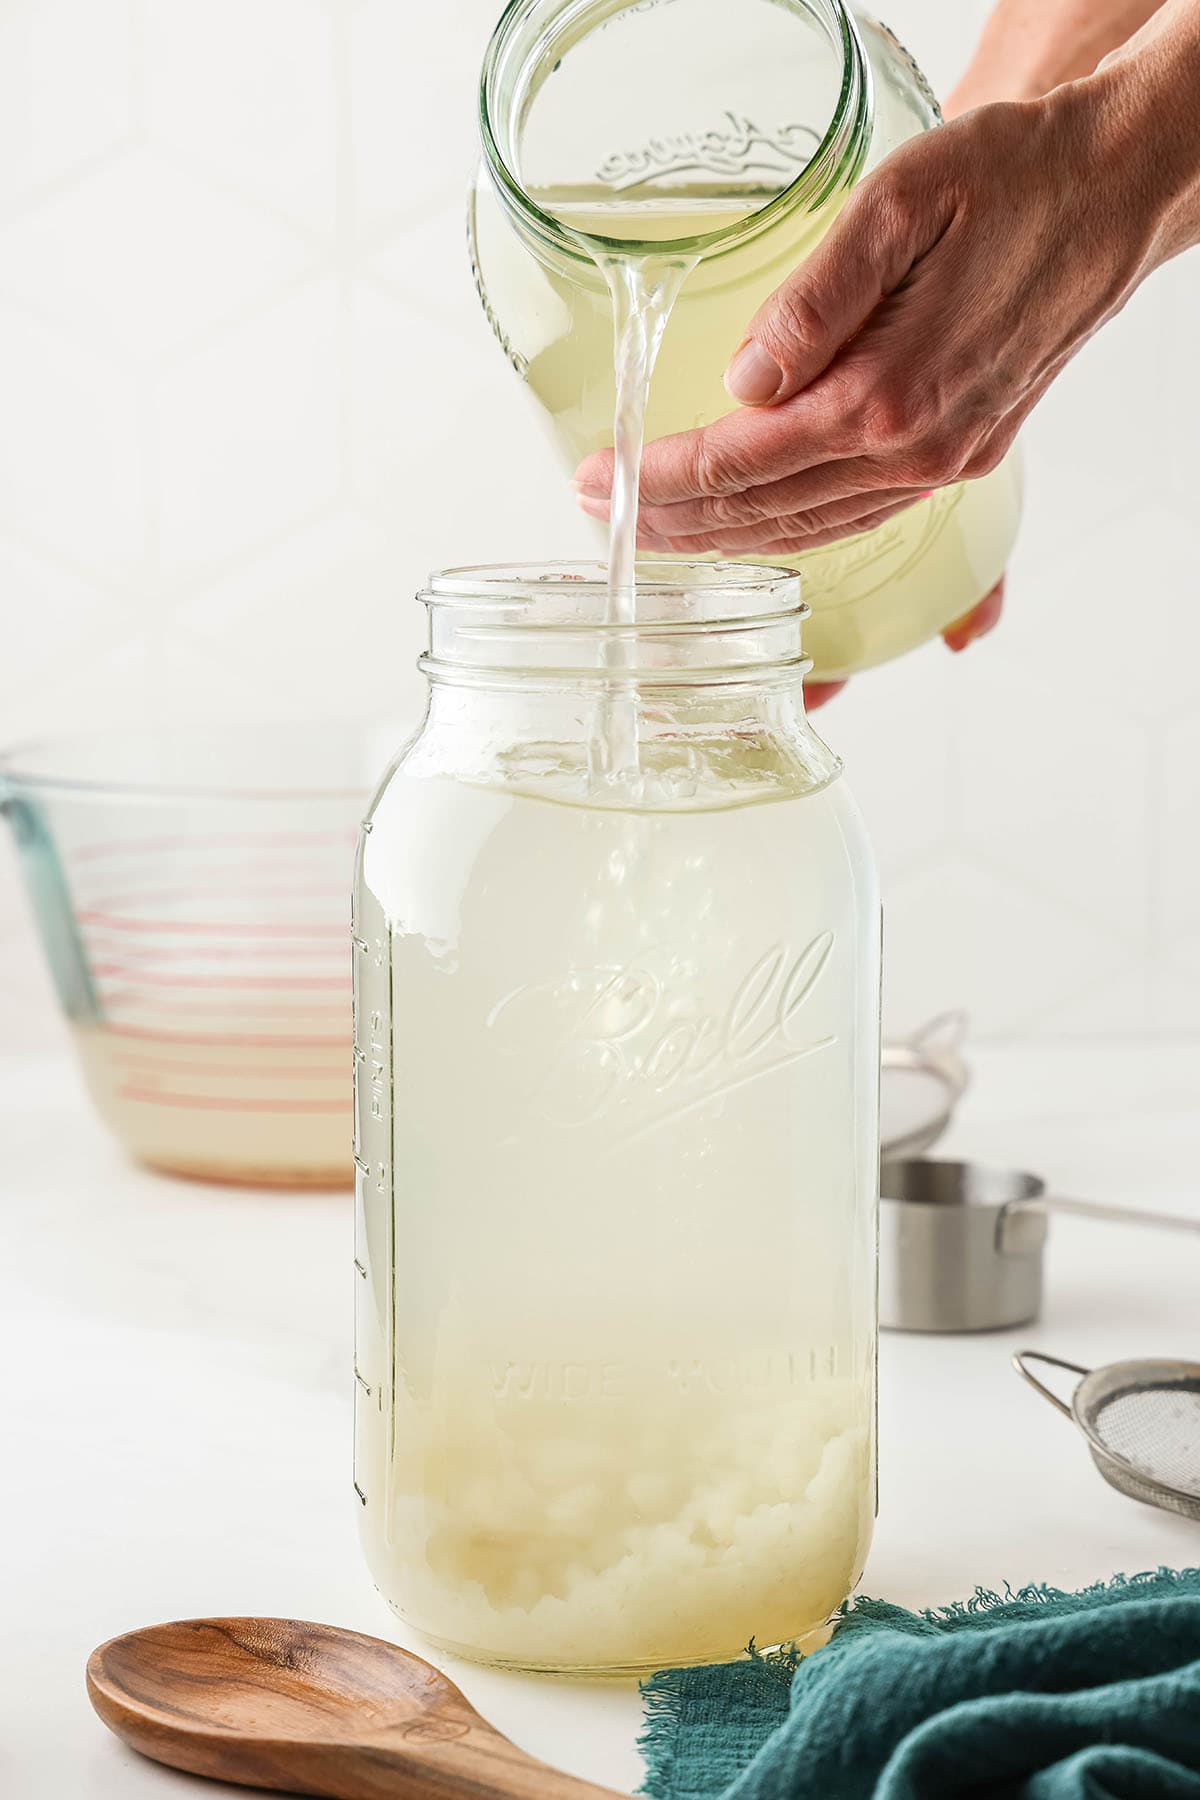 Water kefir starter being added into the jar. 